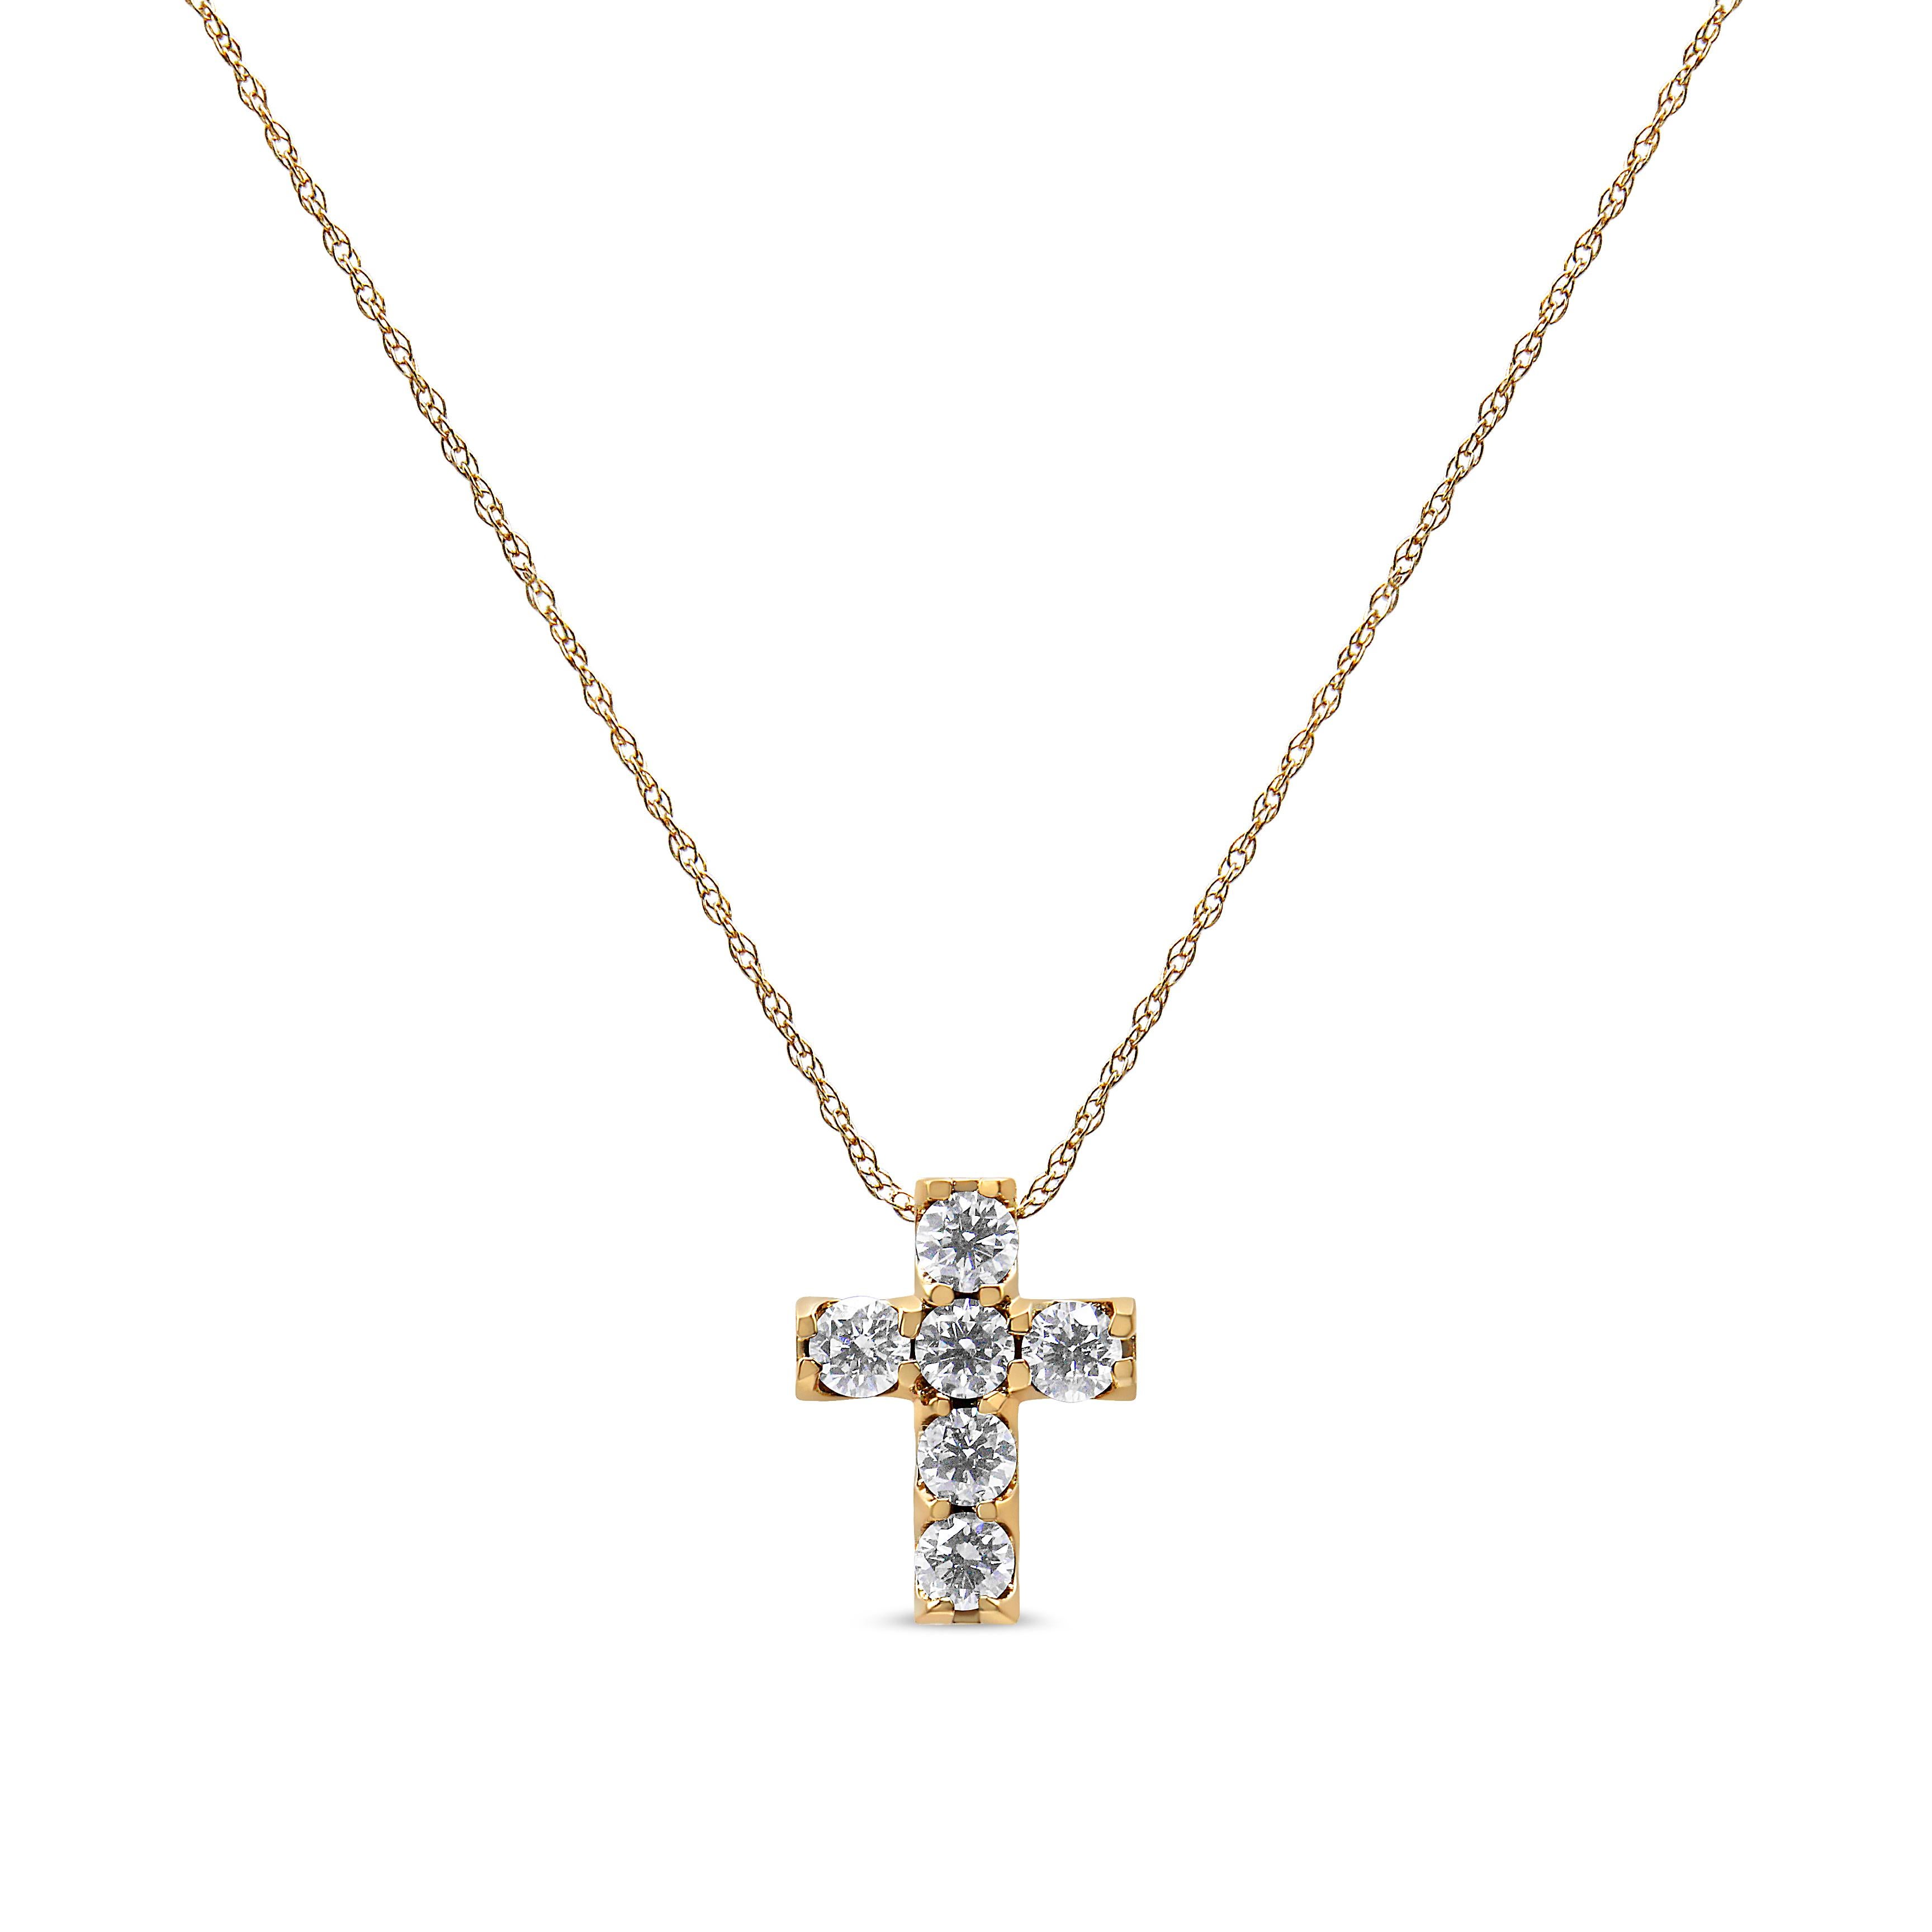 Contemporary 14K Yellow Gold 1/2 Carat Round Cut Diamond Mini Cross Pendant Necklace